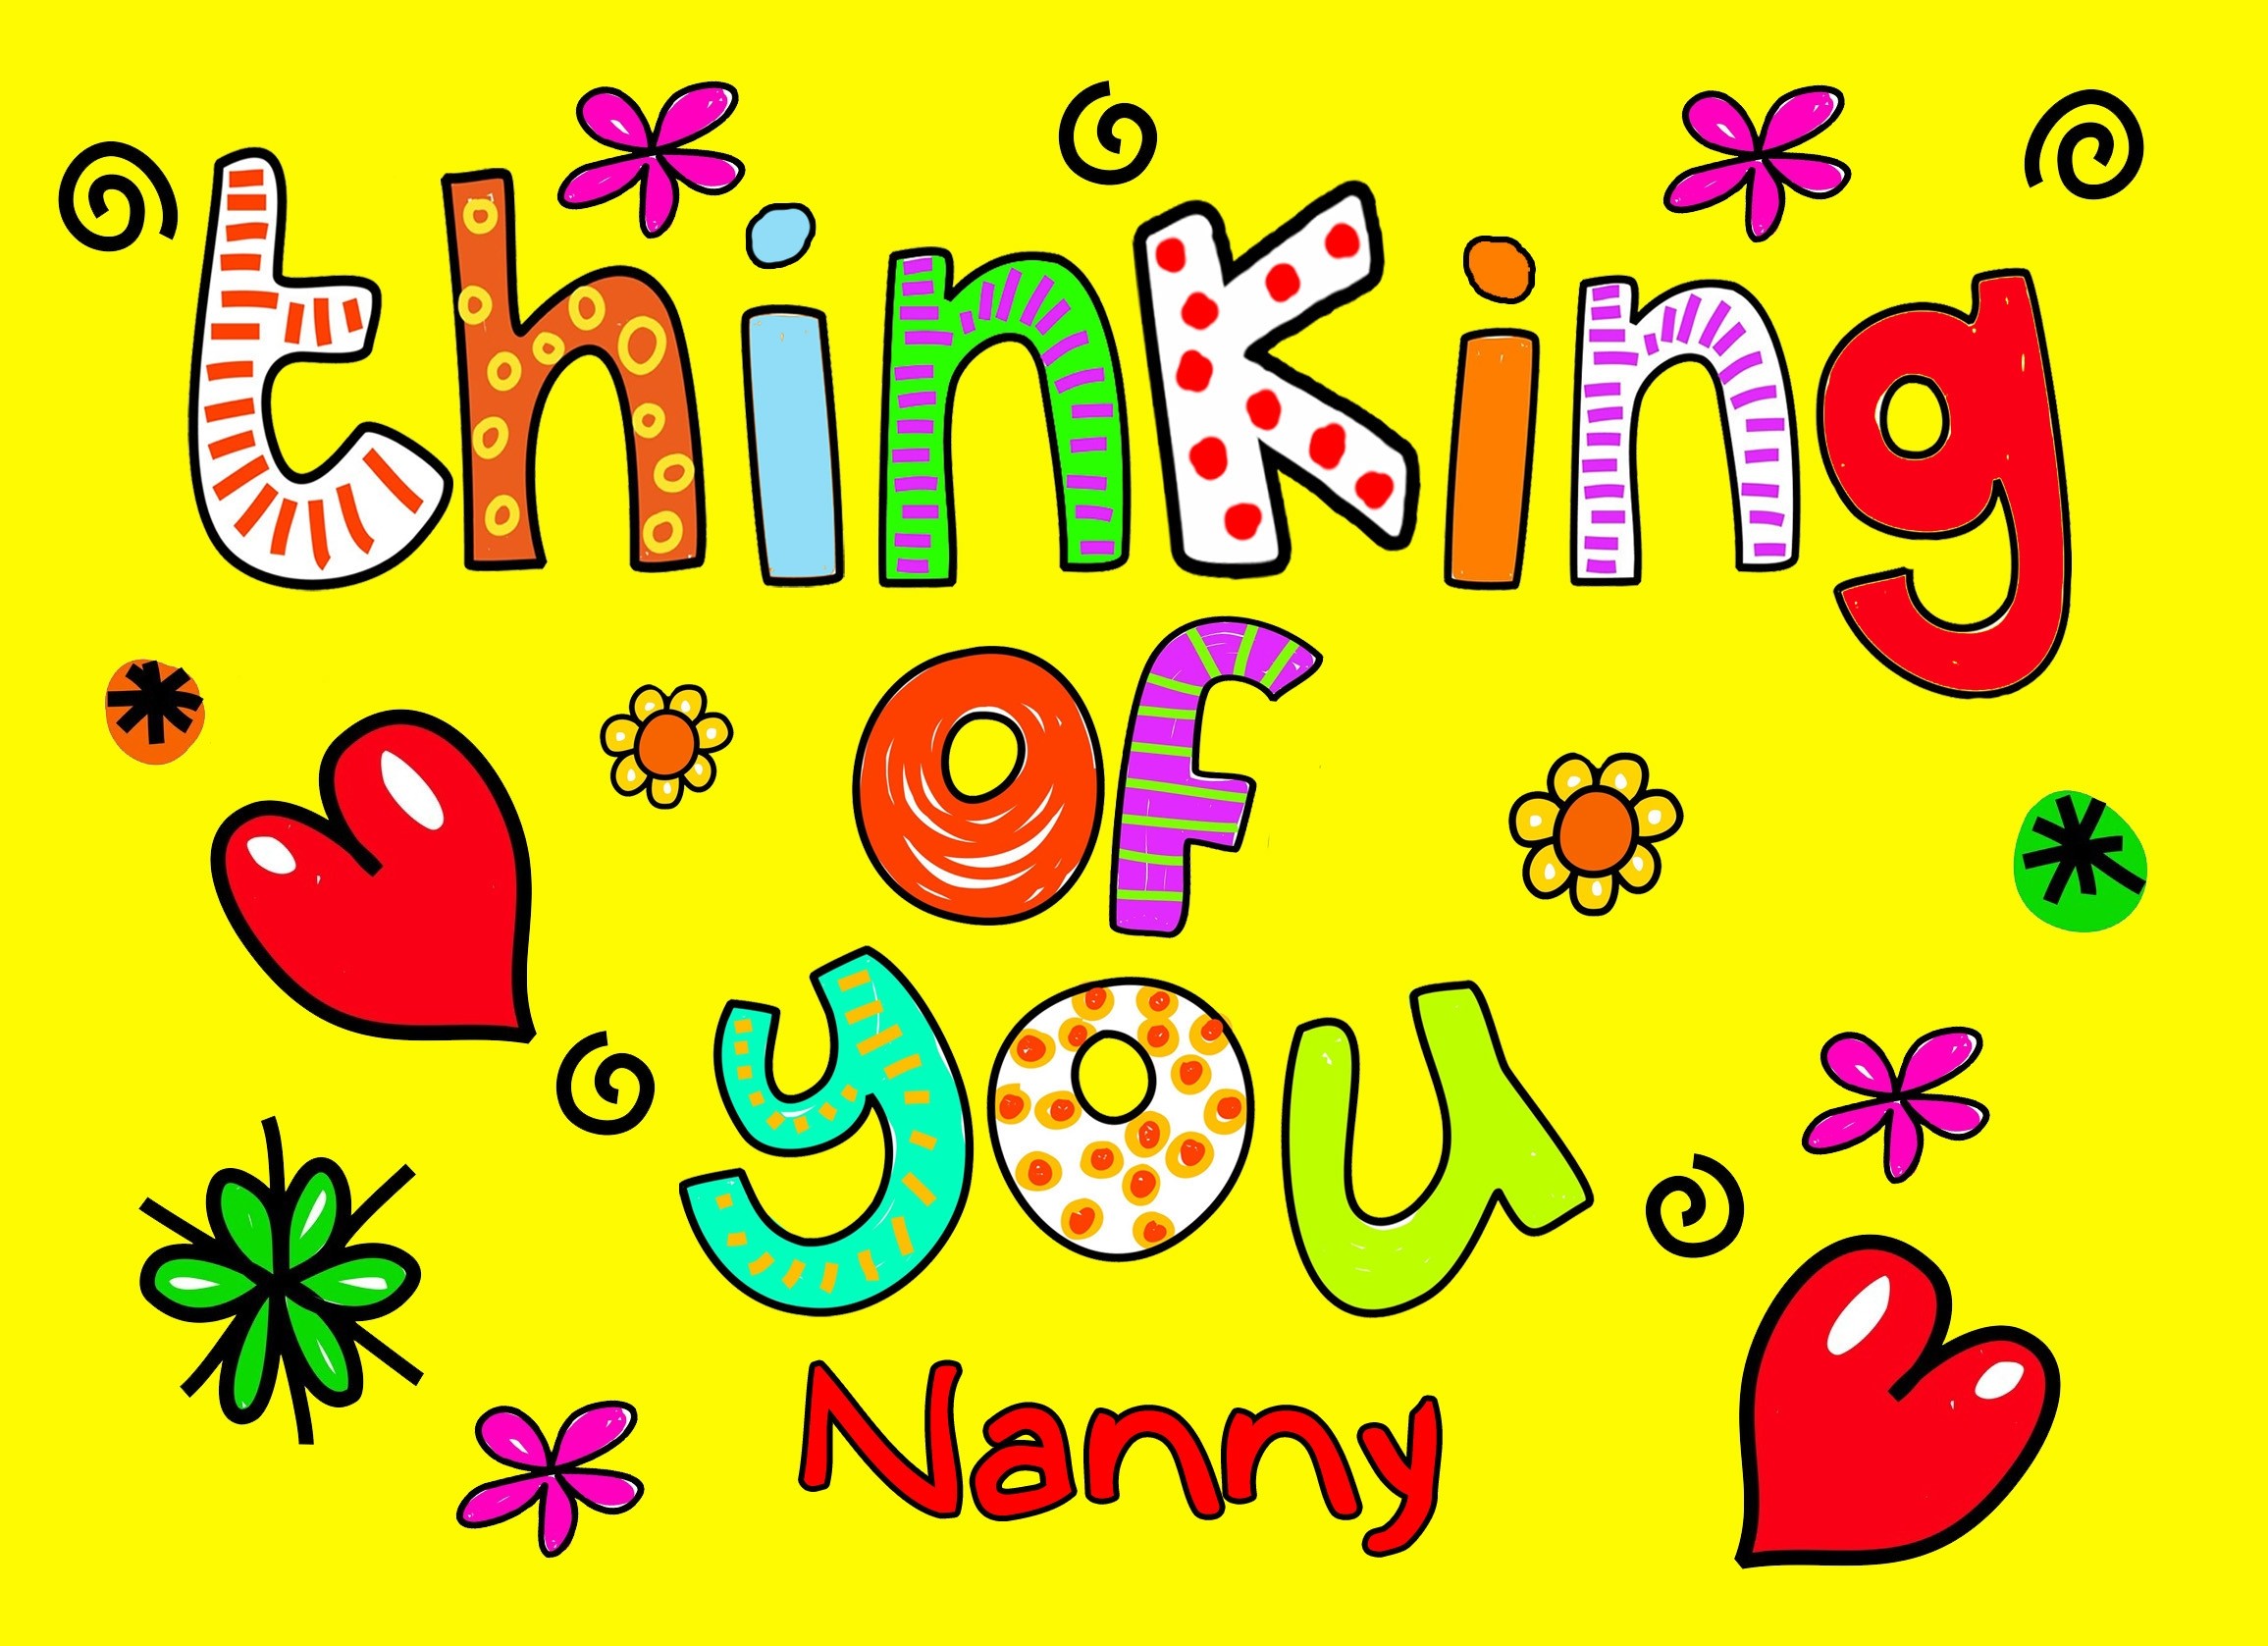 Thinking of You 'Nanny' Greeting Card